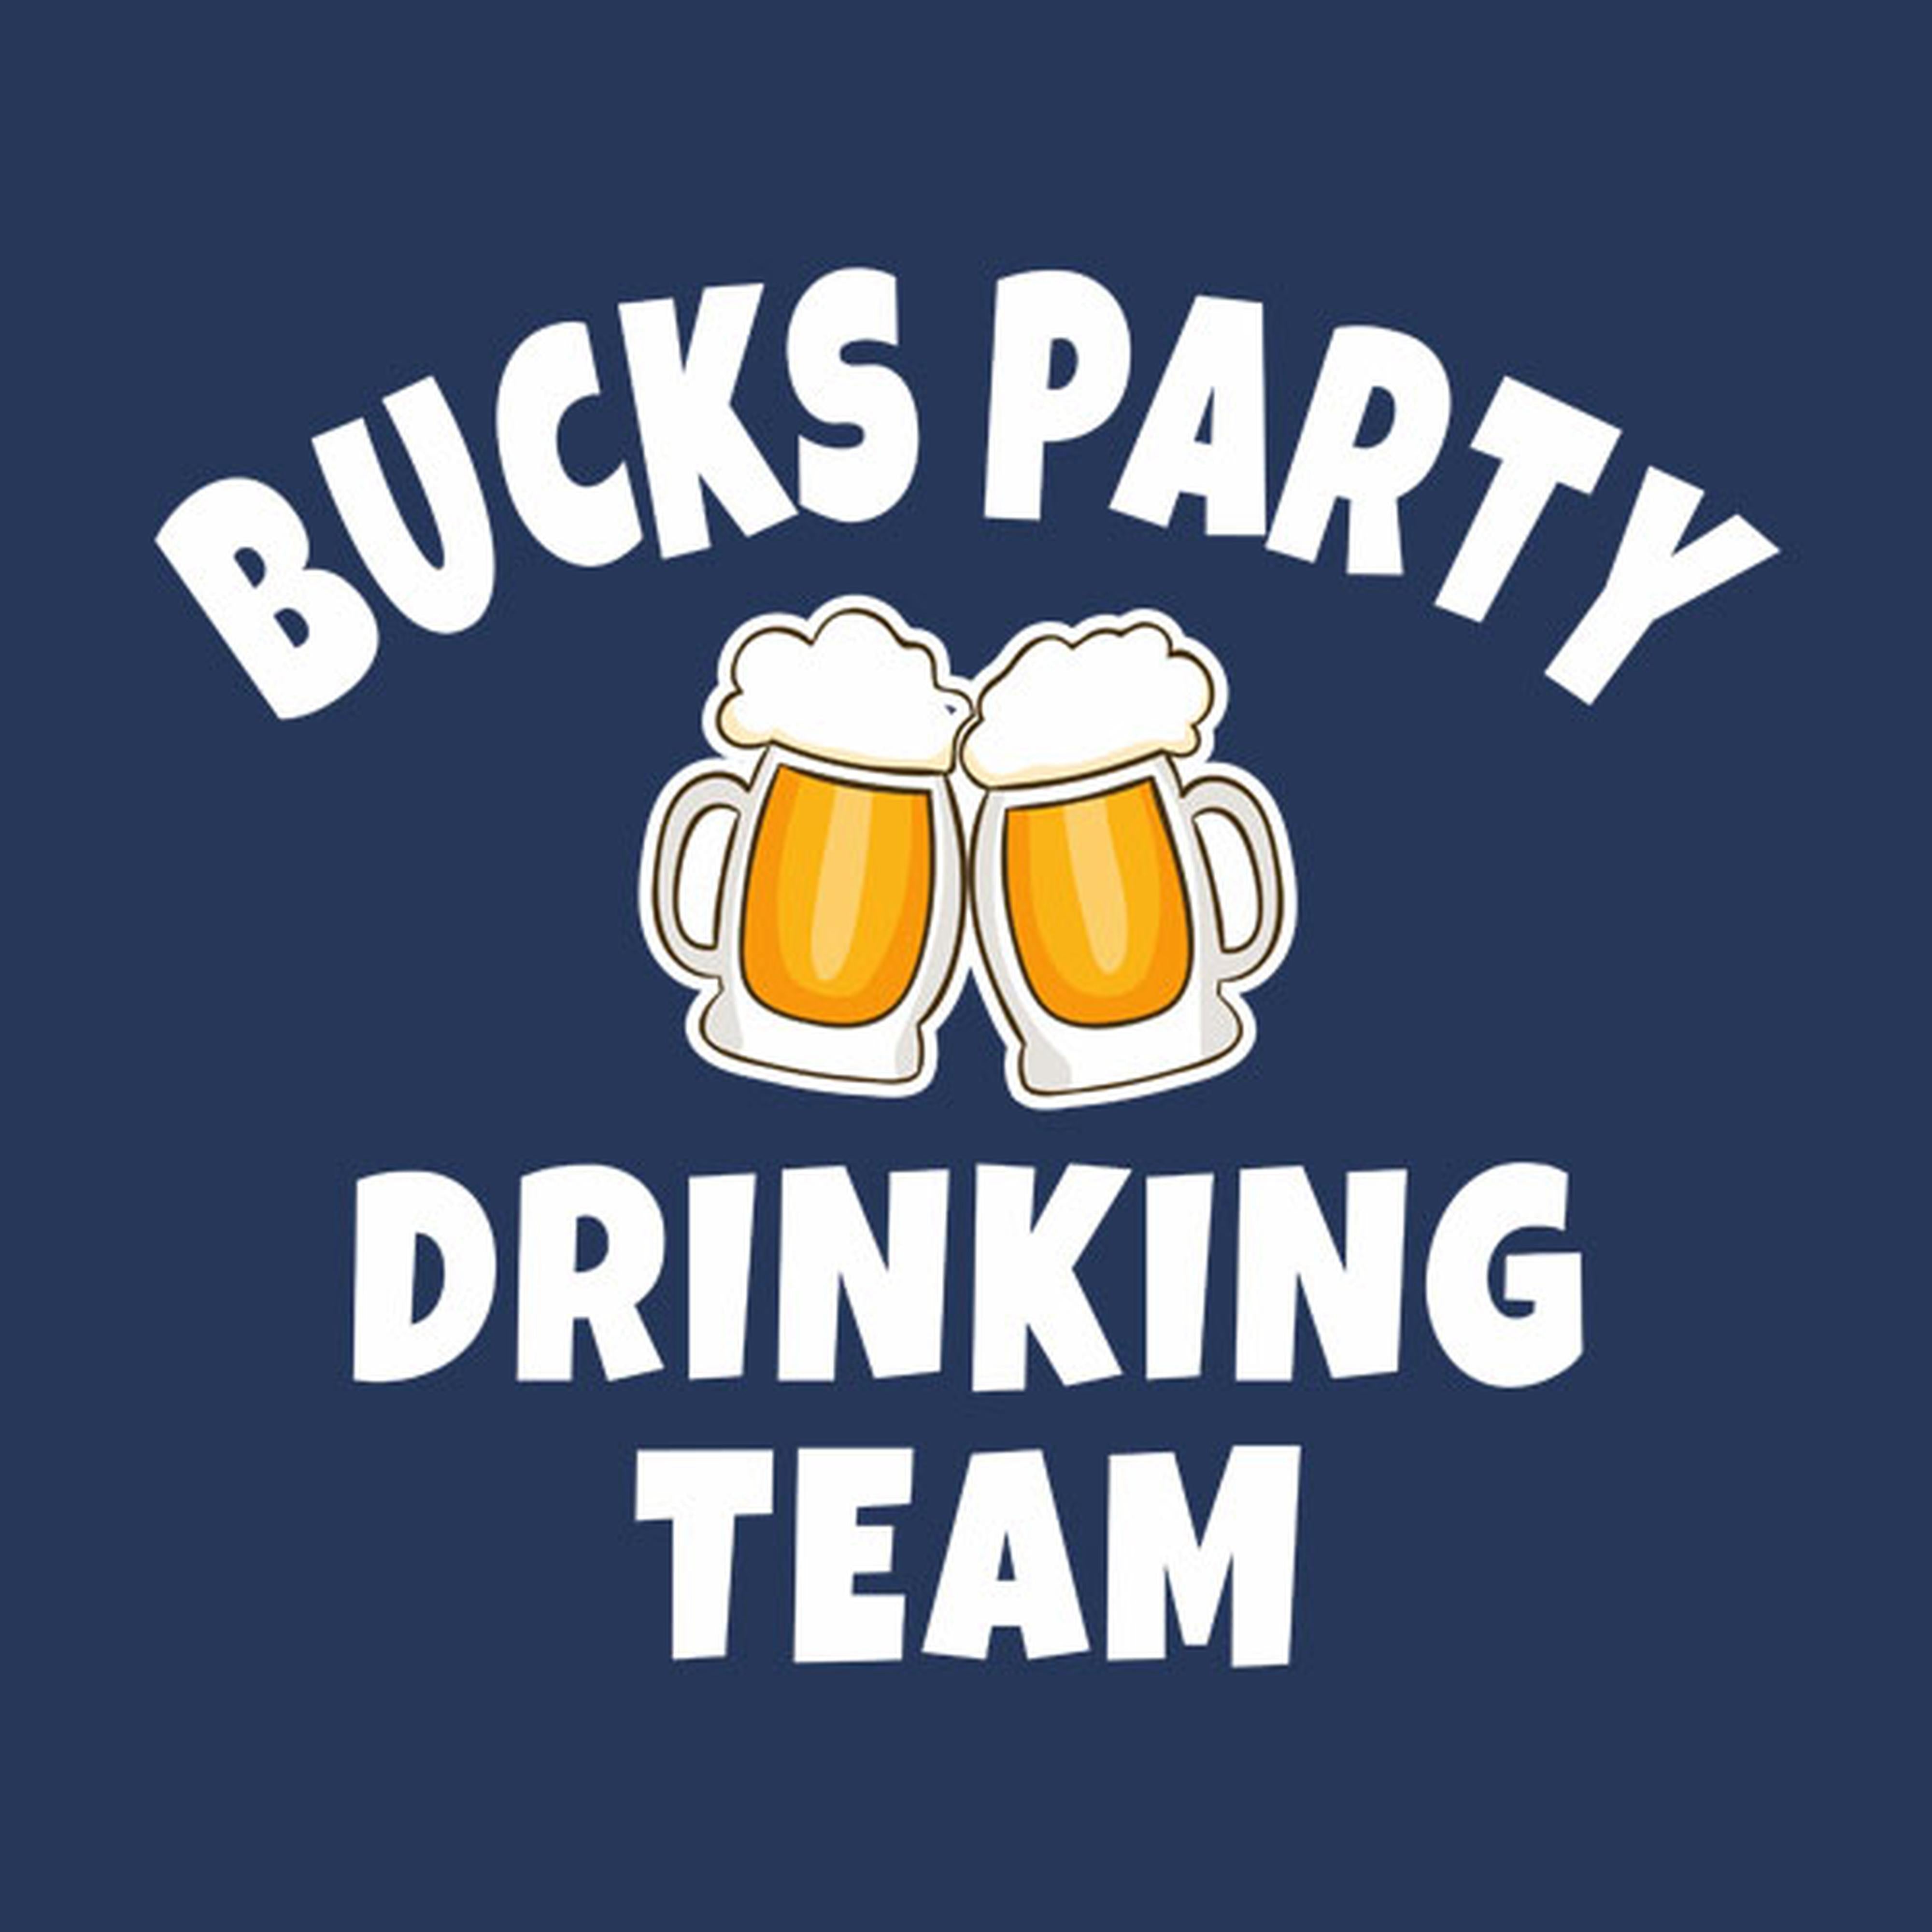 Bucks party drinking team - T-shirt